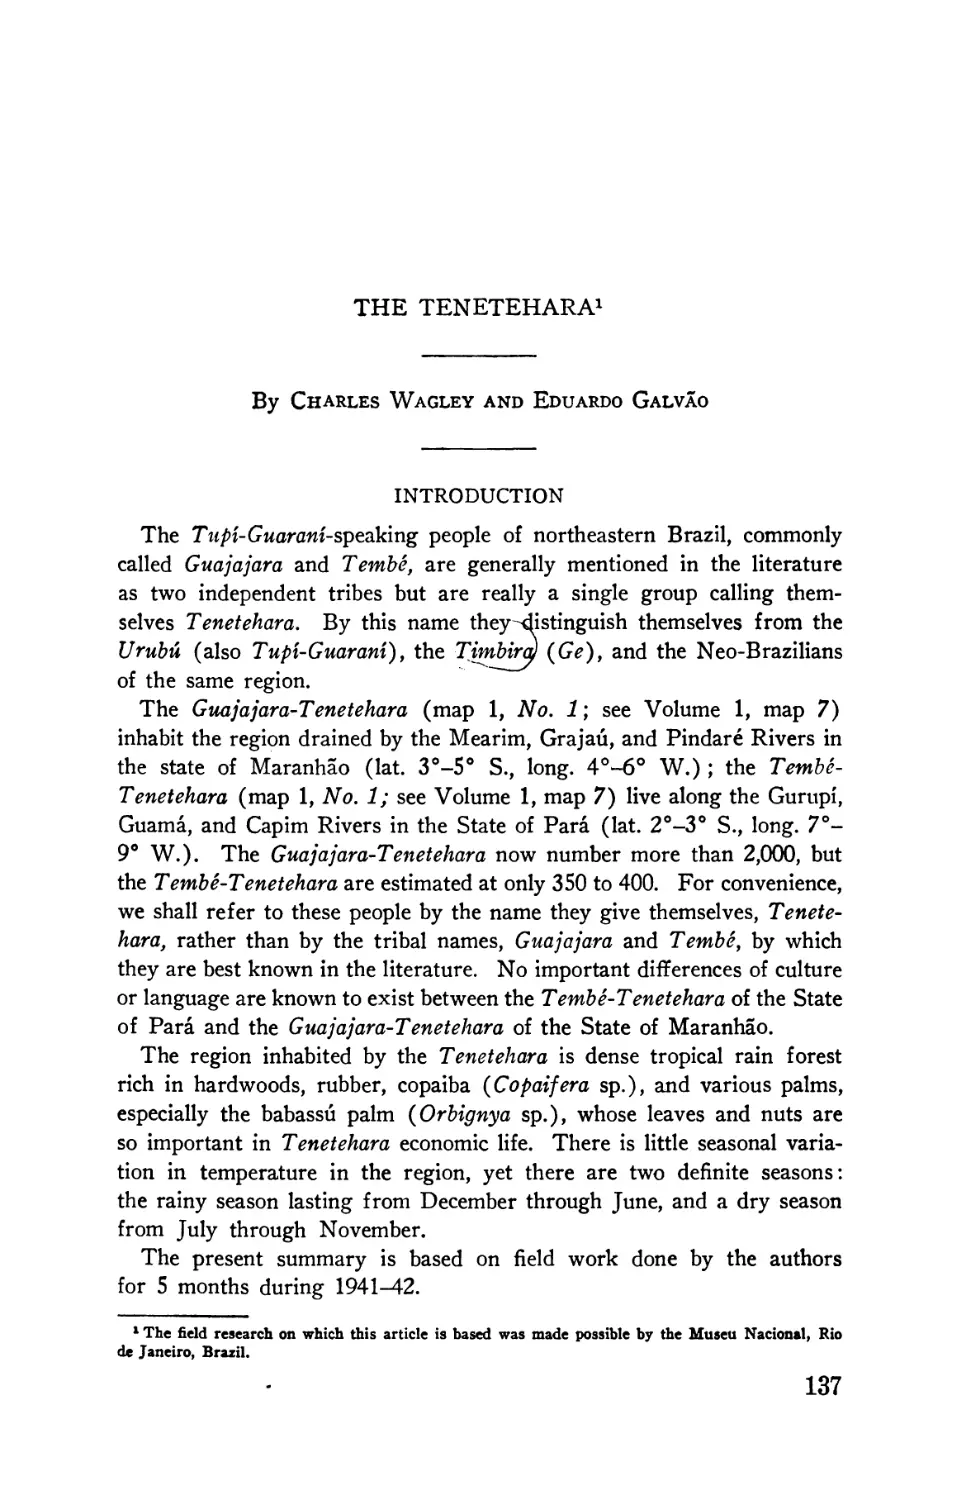 Bibliography
The Tenetehara, by Charles Wagley and Eduardo Galváo